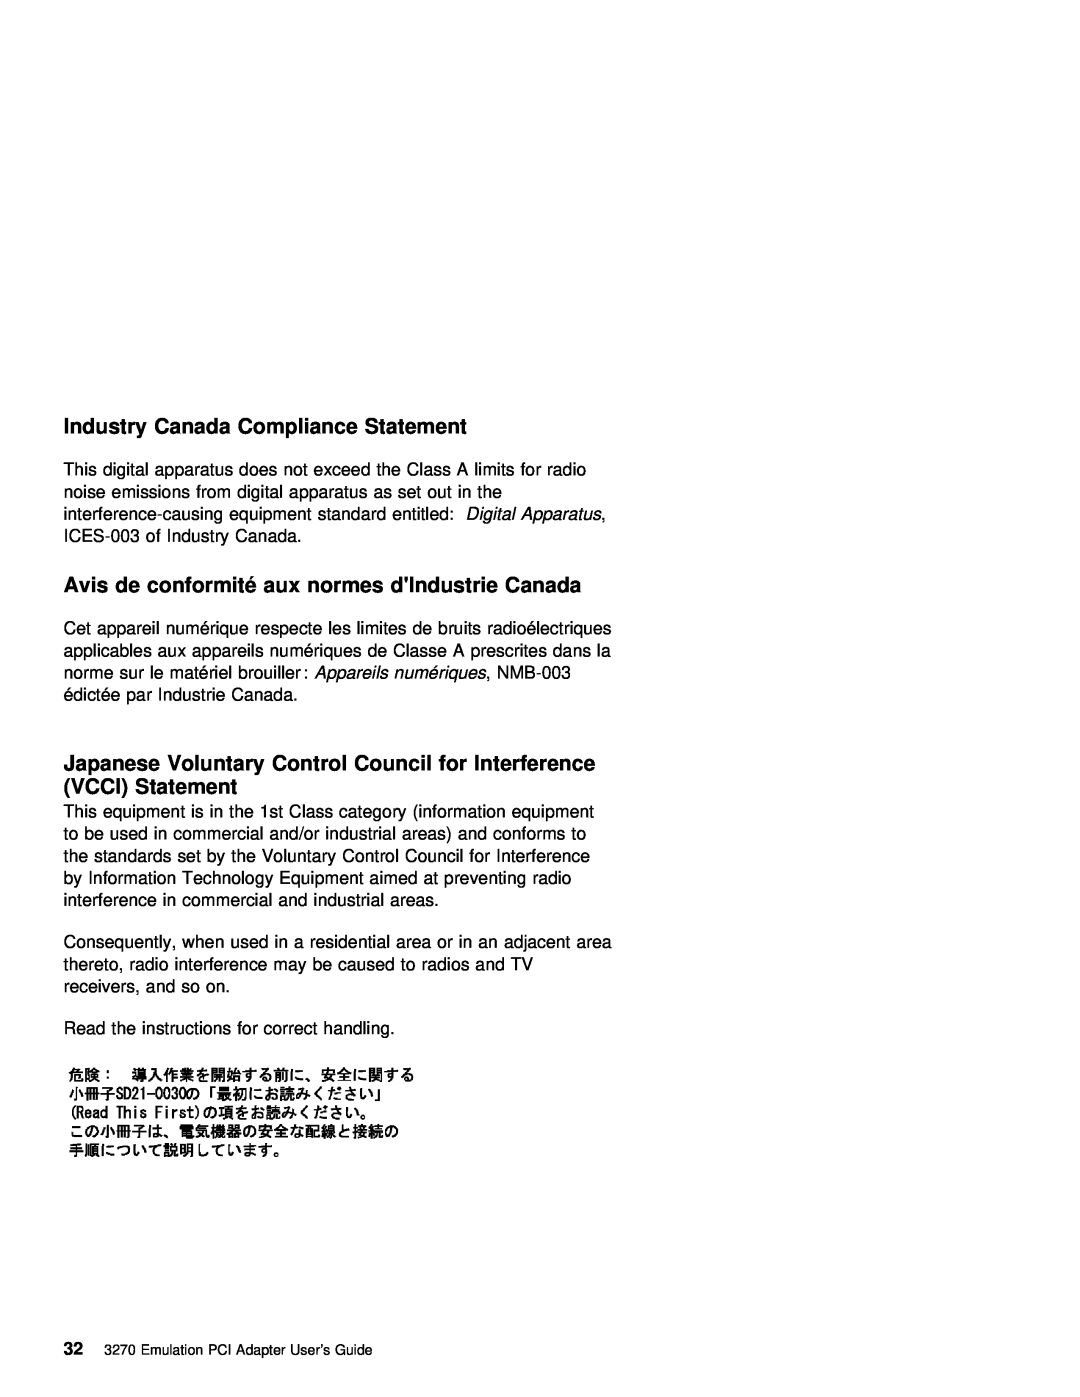 IBM 3270 manual Industry Canada Compliance Statement, Avis de conformité aux normes dIndustrie Canada, Interference, Vcci 